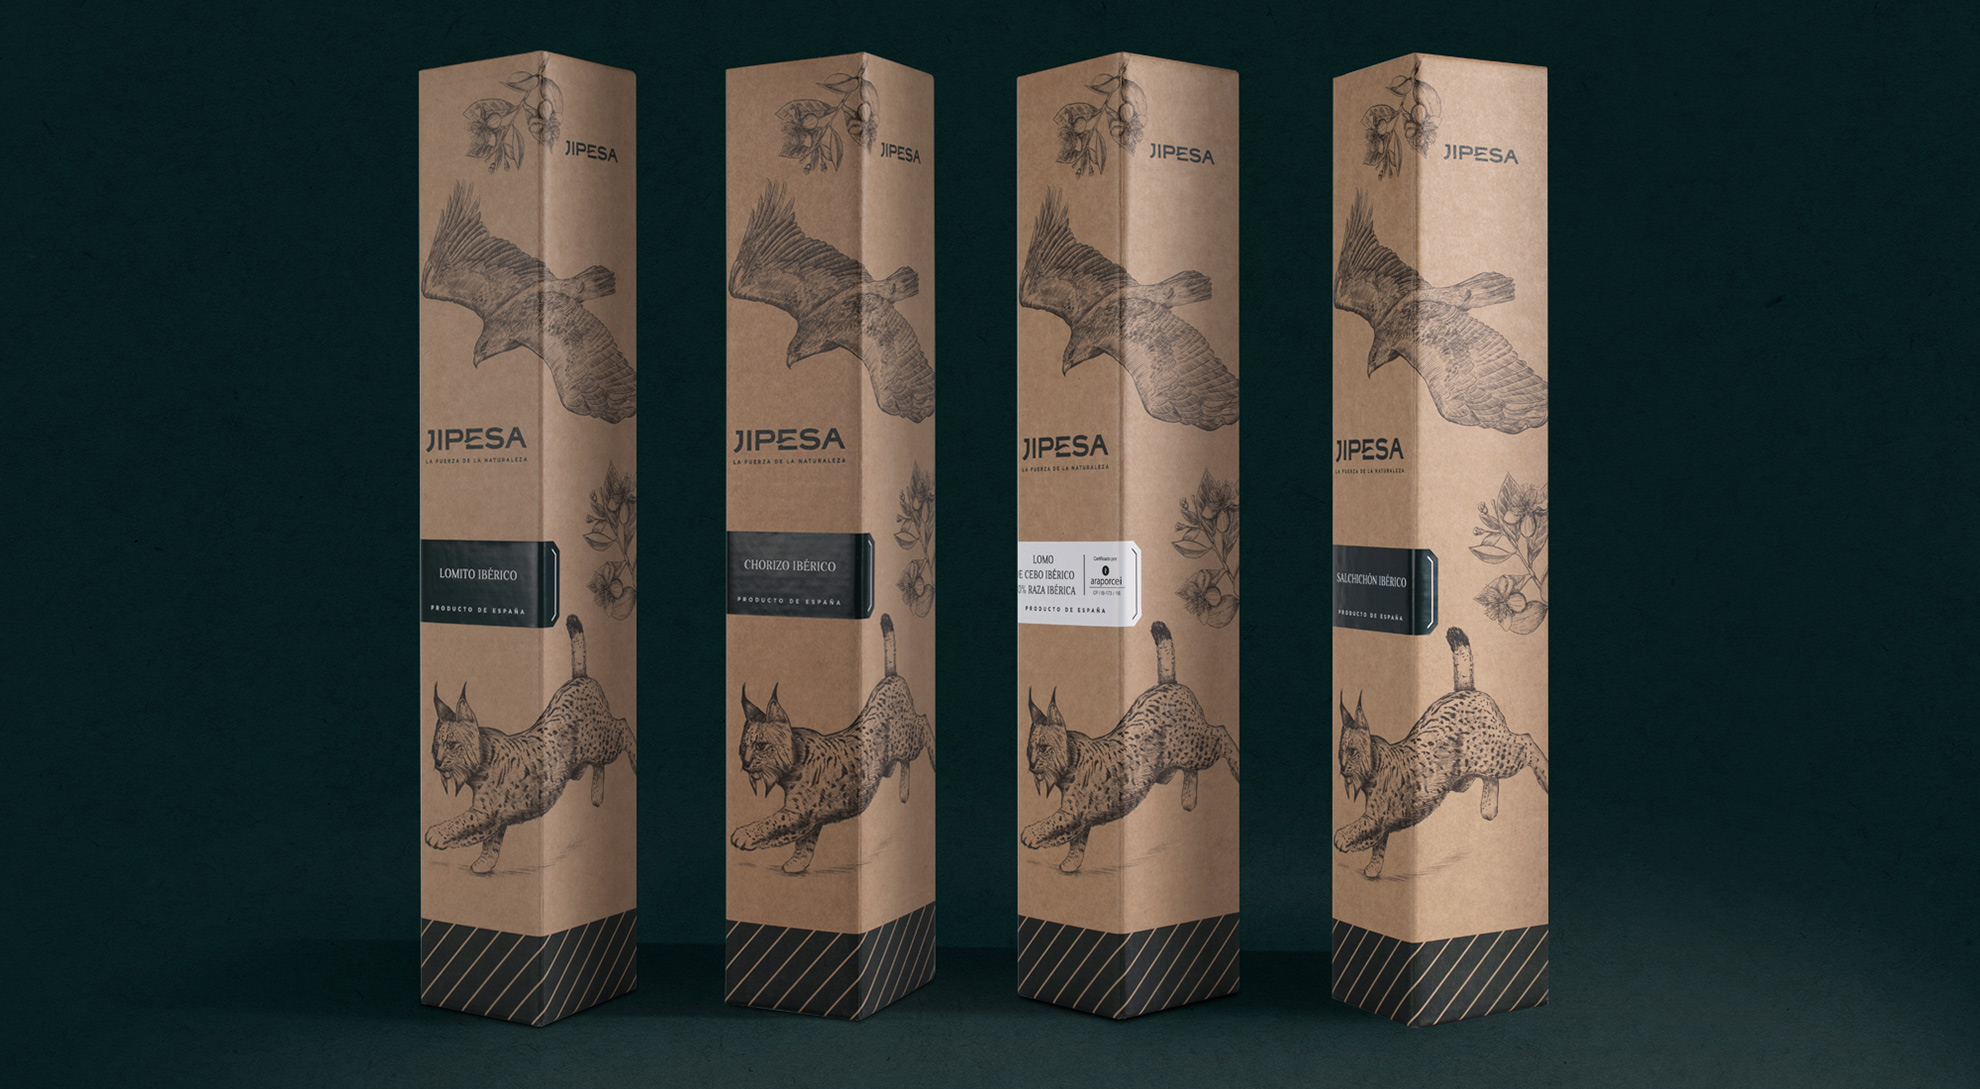 Fylgia diseño de packaging para vino